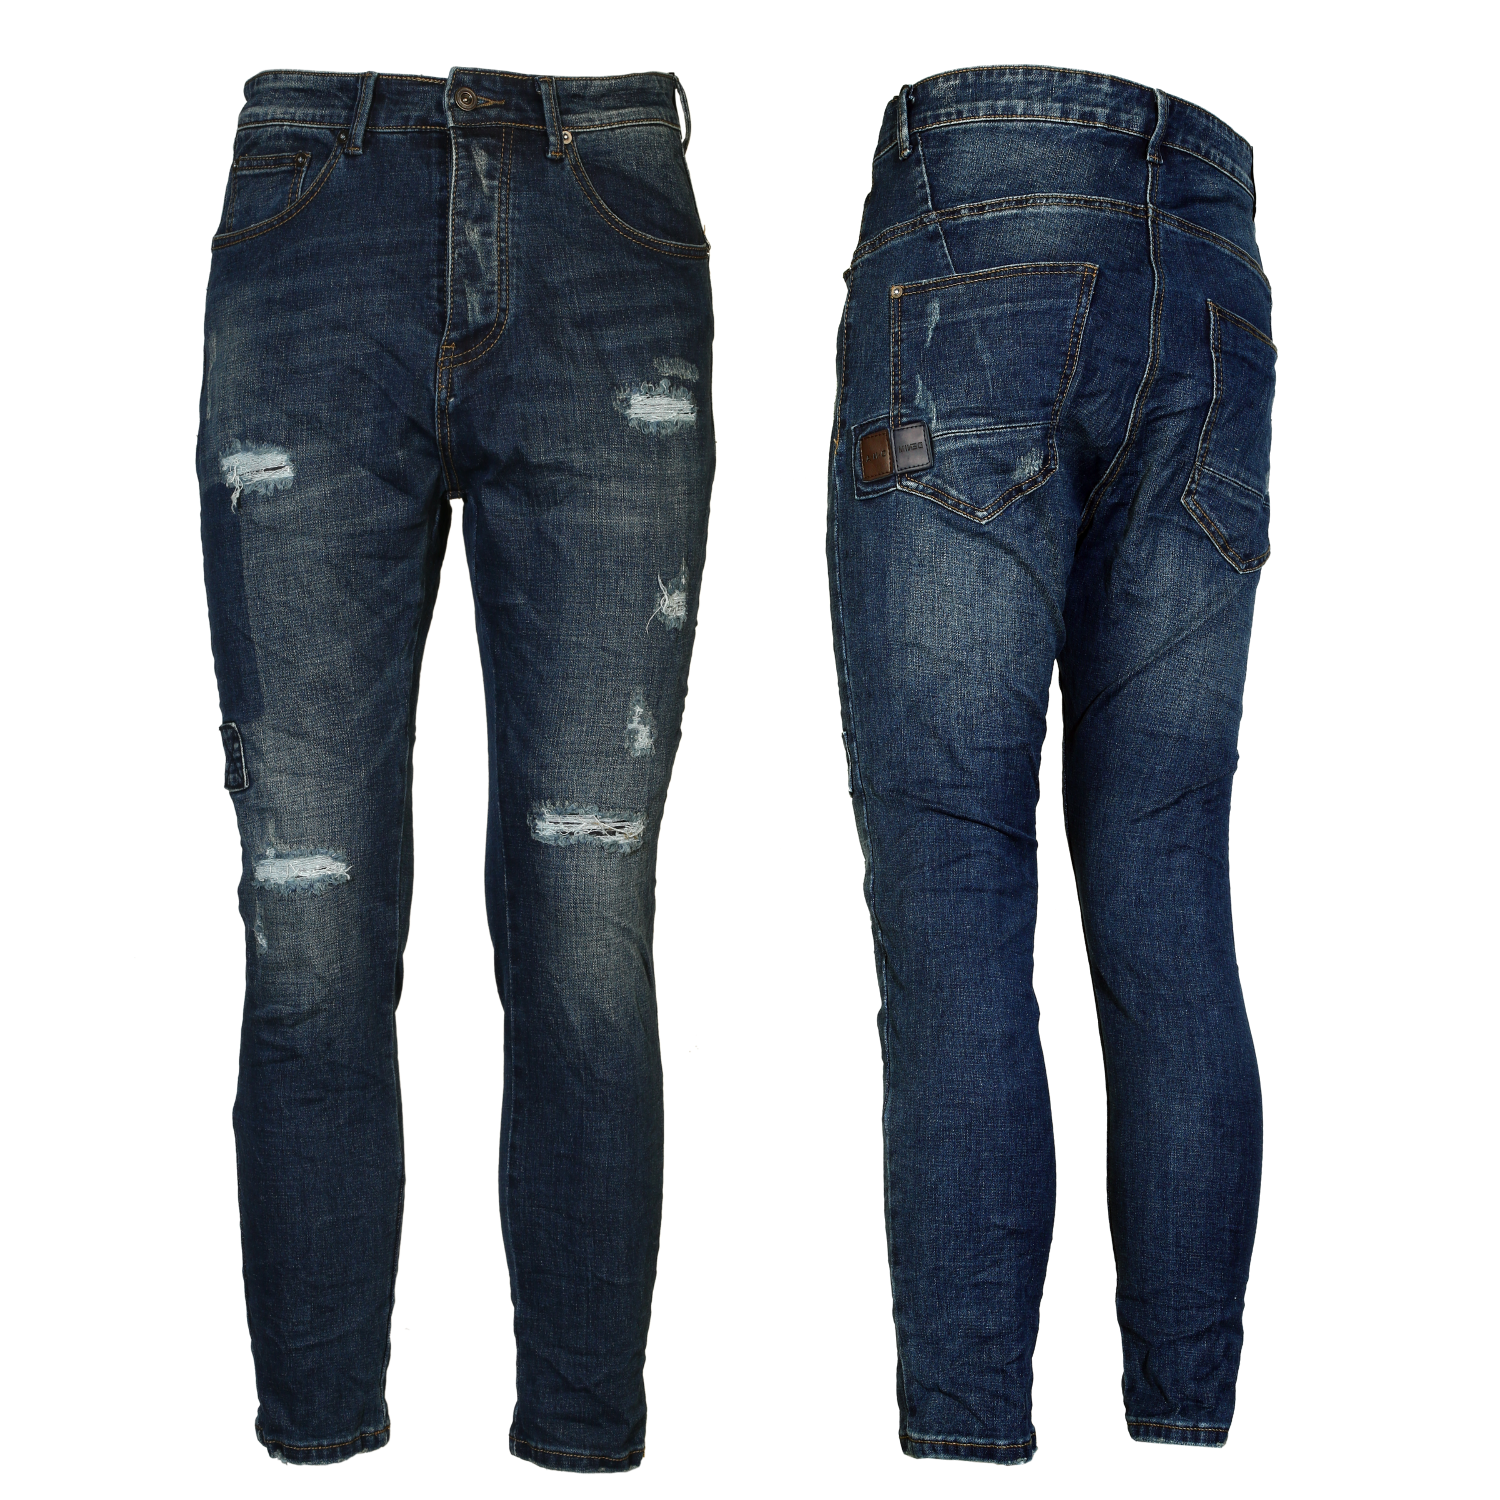 Jeans Uomo con Rotture Denim 5 Tasche Slim Fit esprez